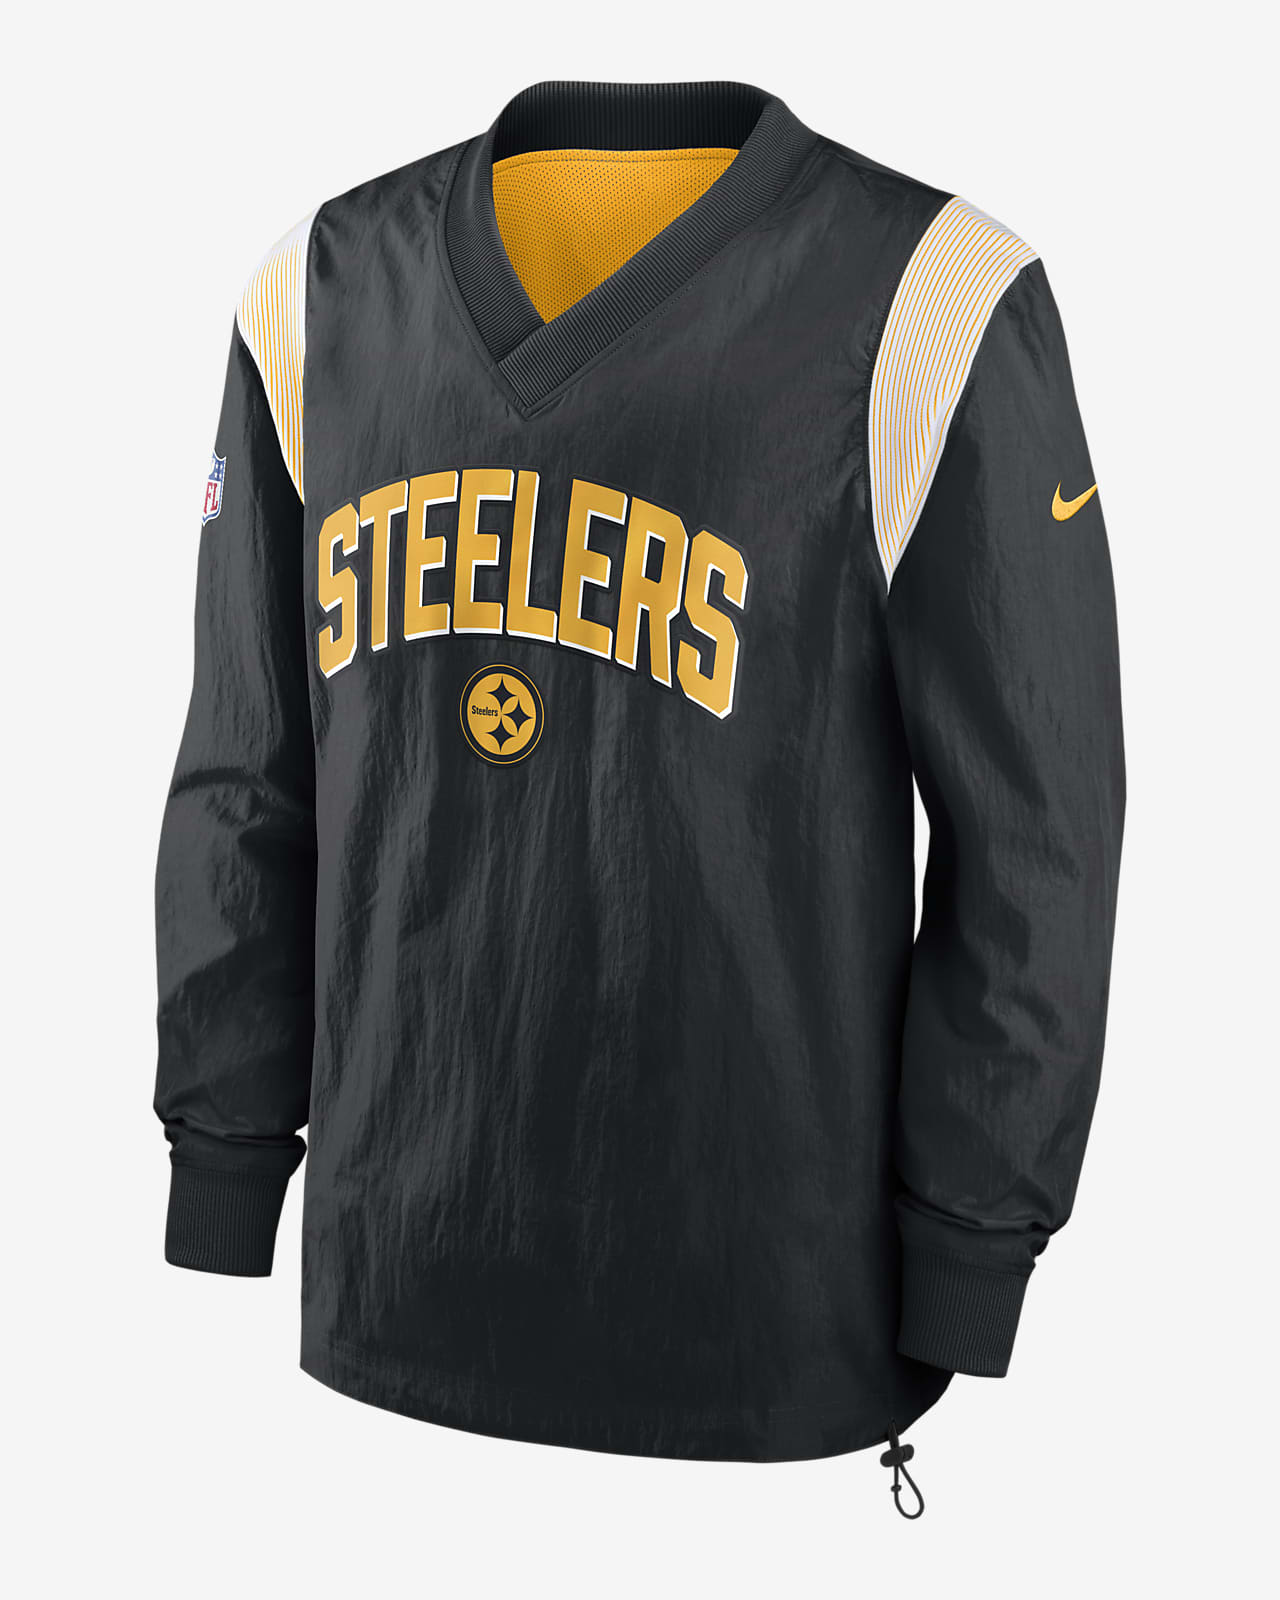 Nike Athletic Stack (NFL Pittsburgh Steelers) Men's Pullover Jacket.  